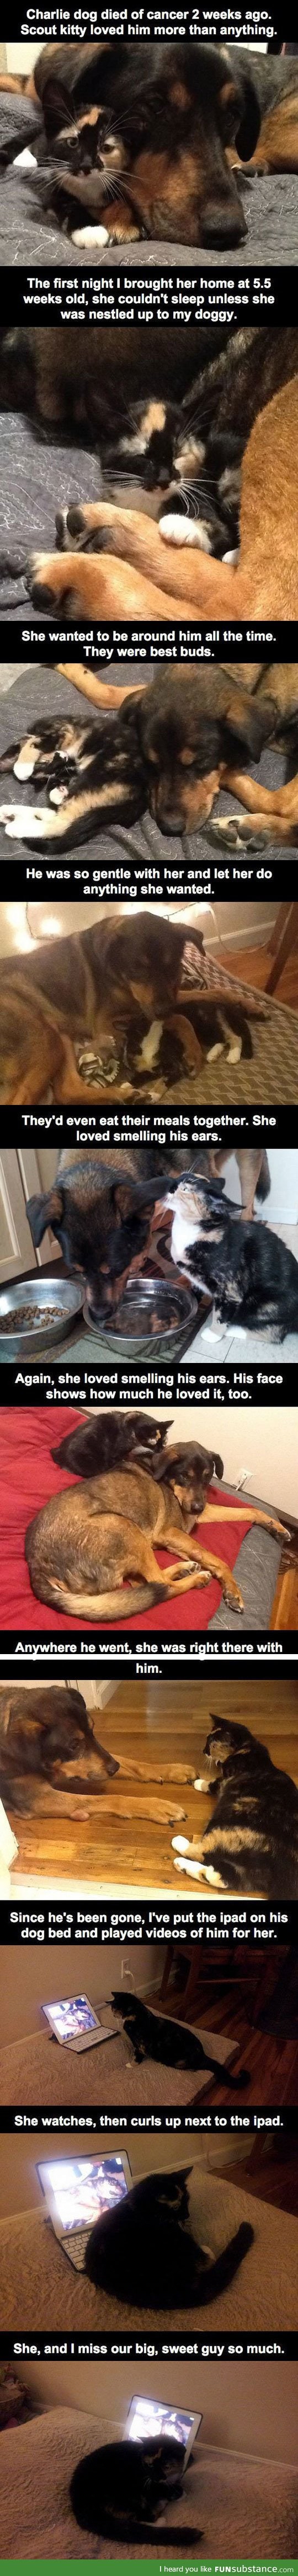 Pets becomes best buddies